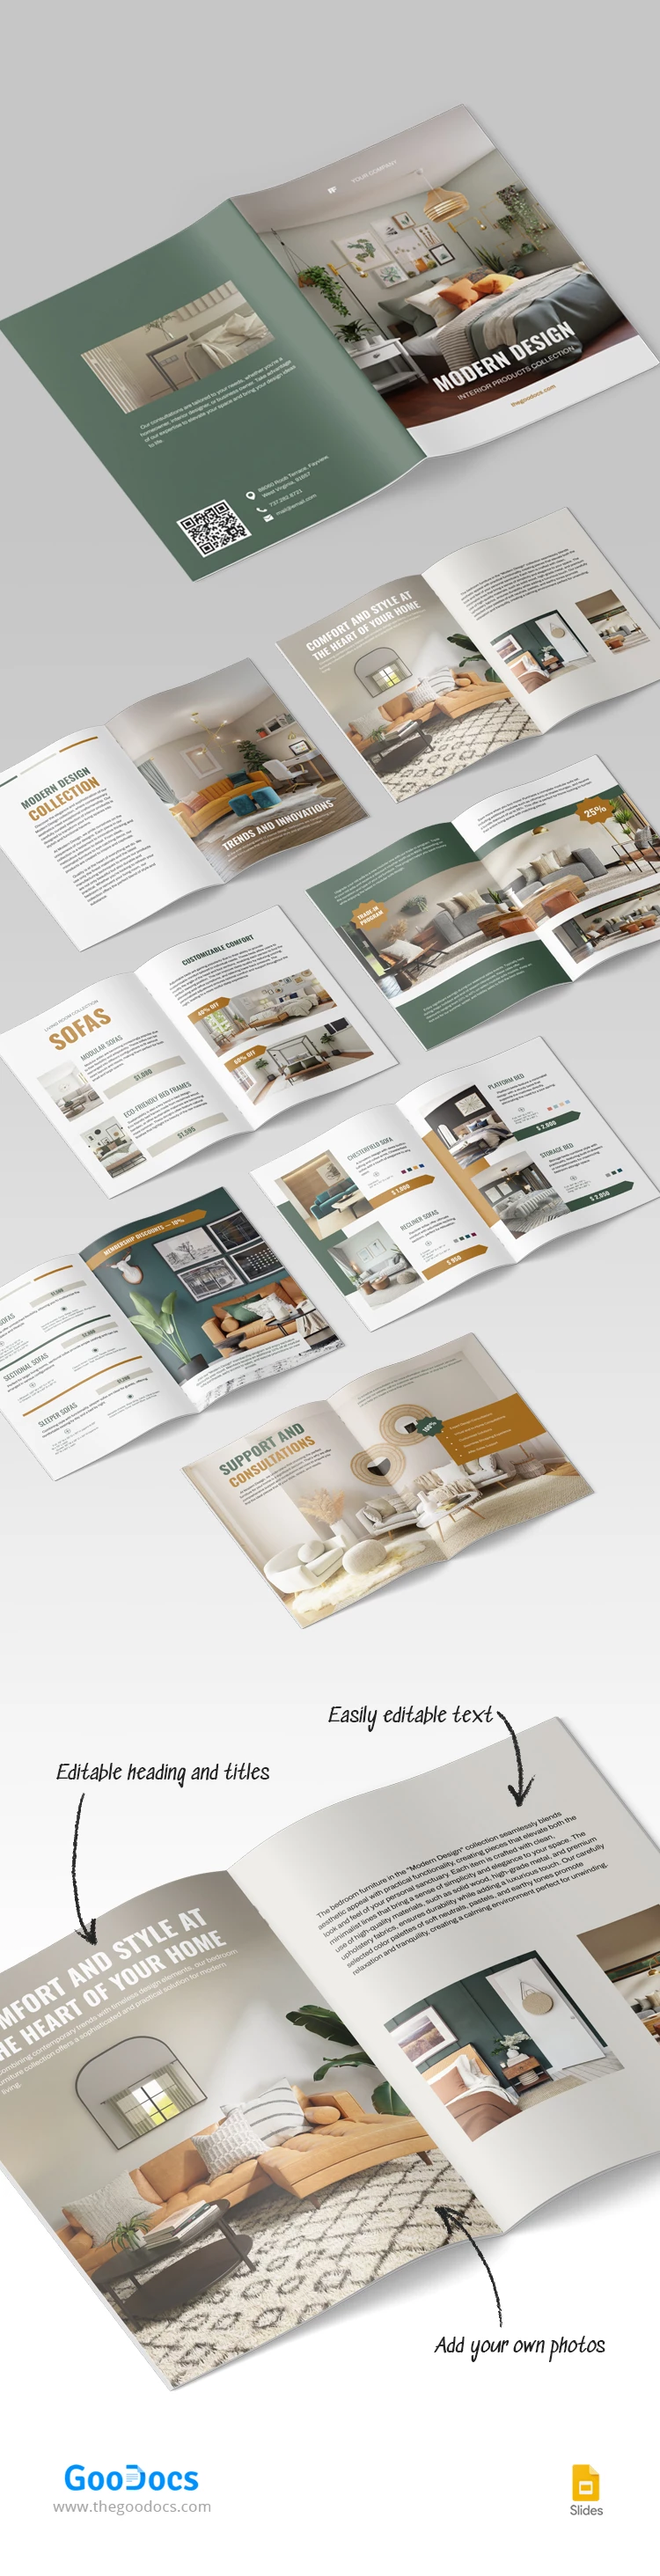 Bifold Product Brochure - free Google Docs Template - 10068716